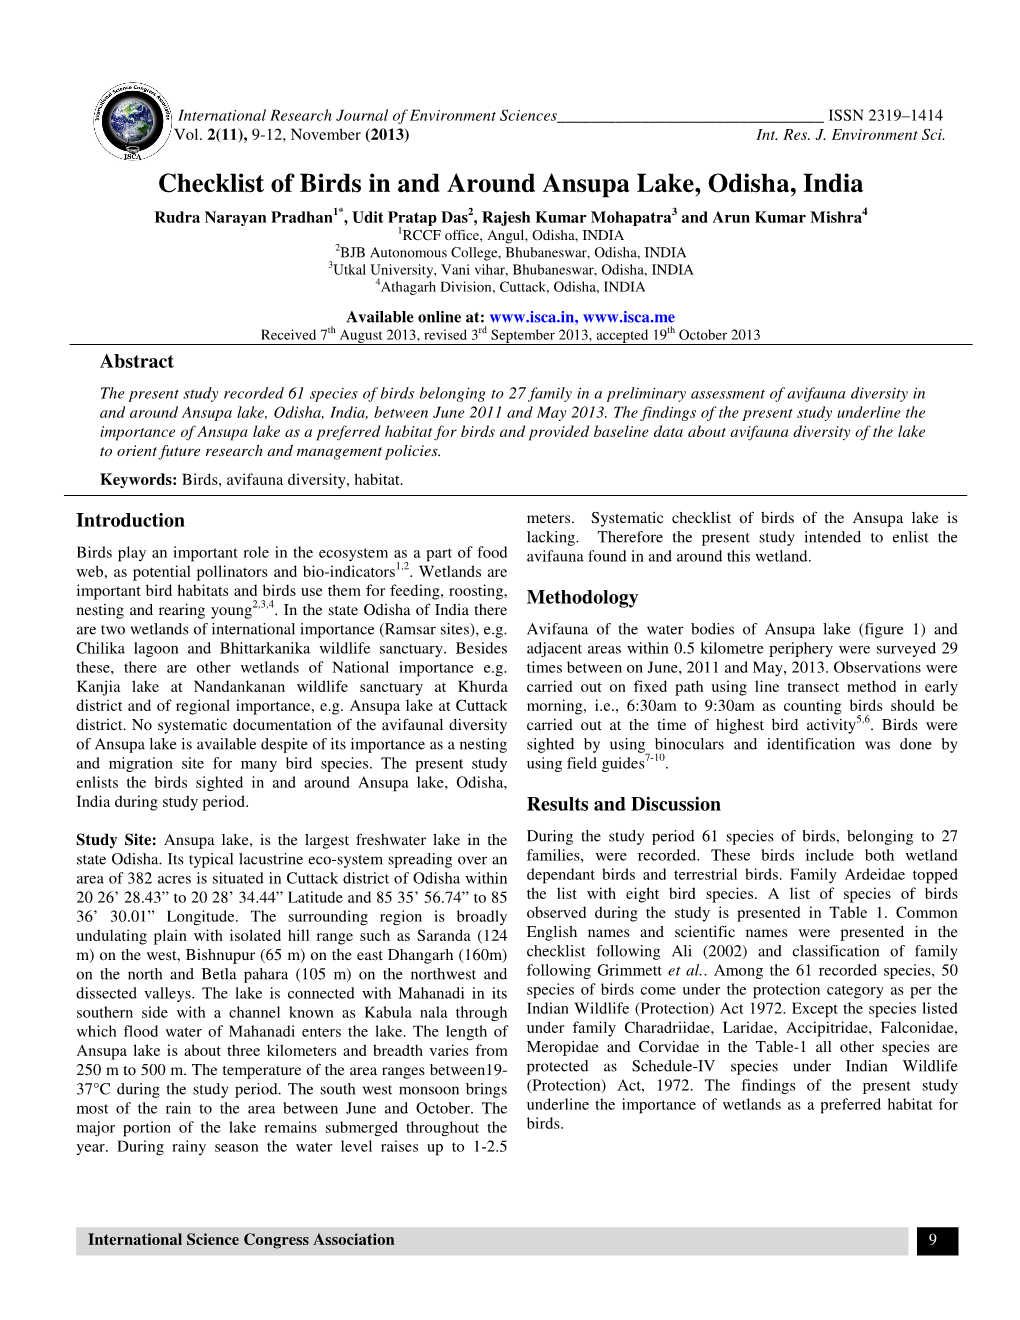 Checklist of Birds in and Around Ansupa Lake, Odisha, India